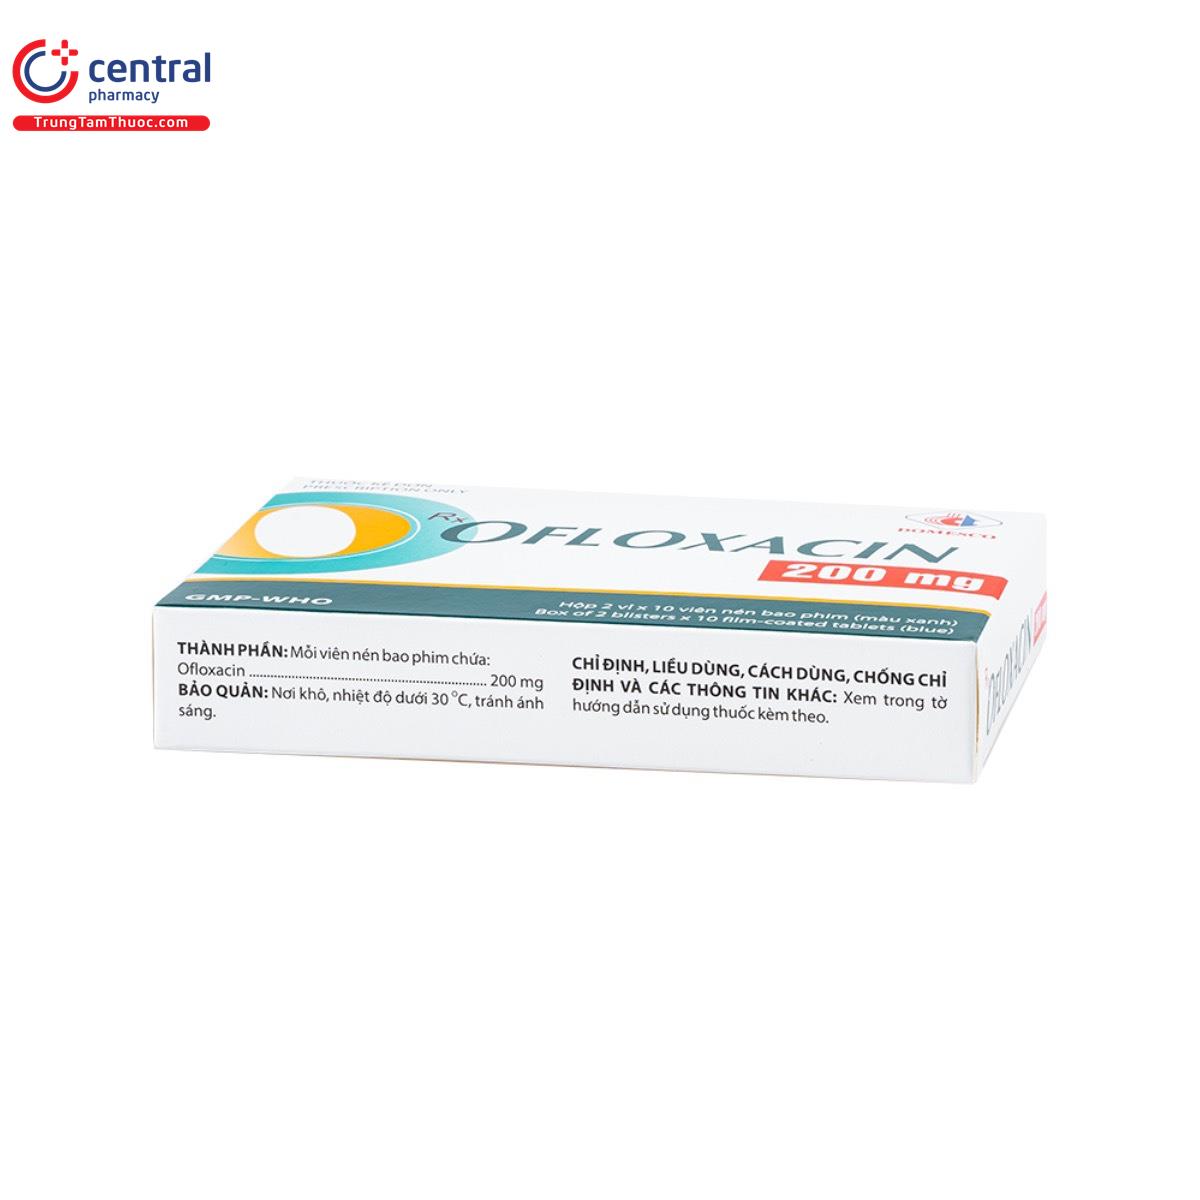 ofloxacin 200mg domesco 5 R7743